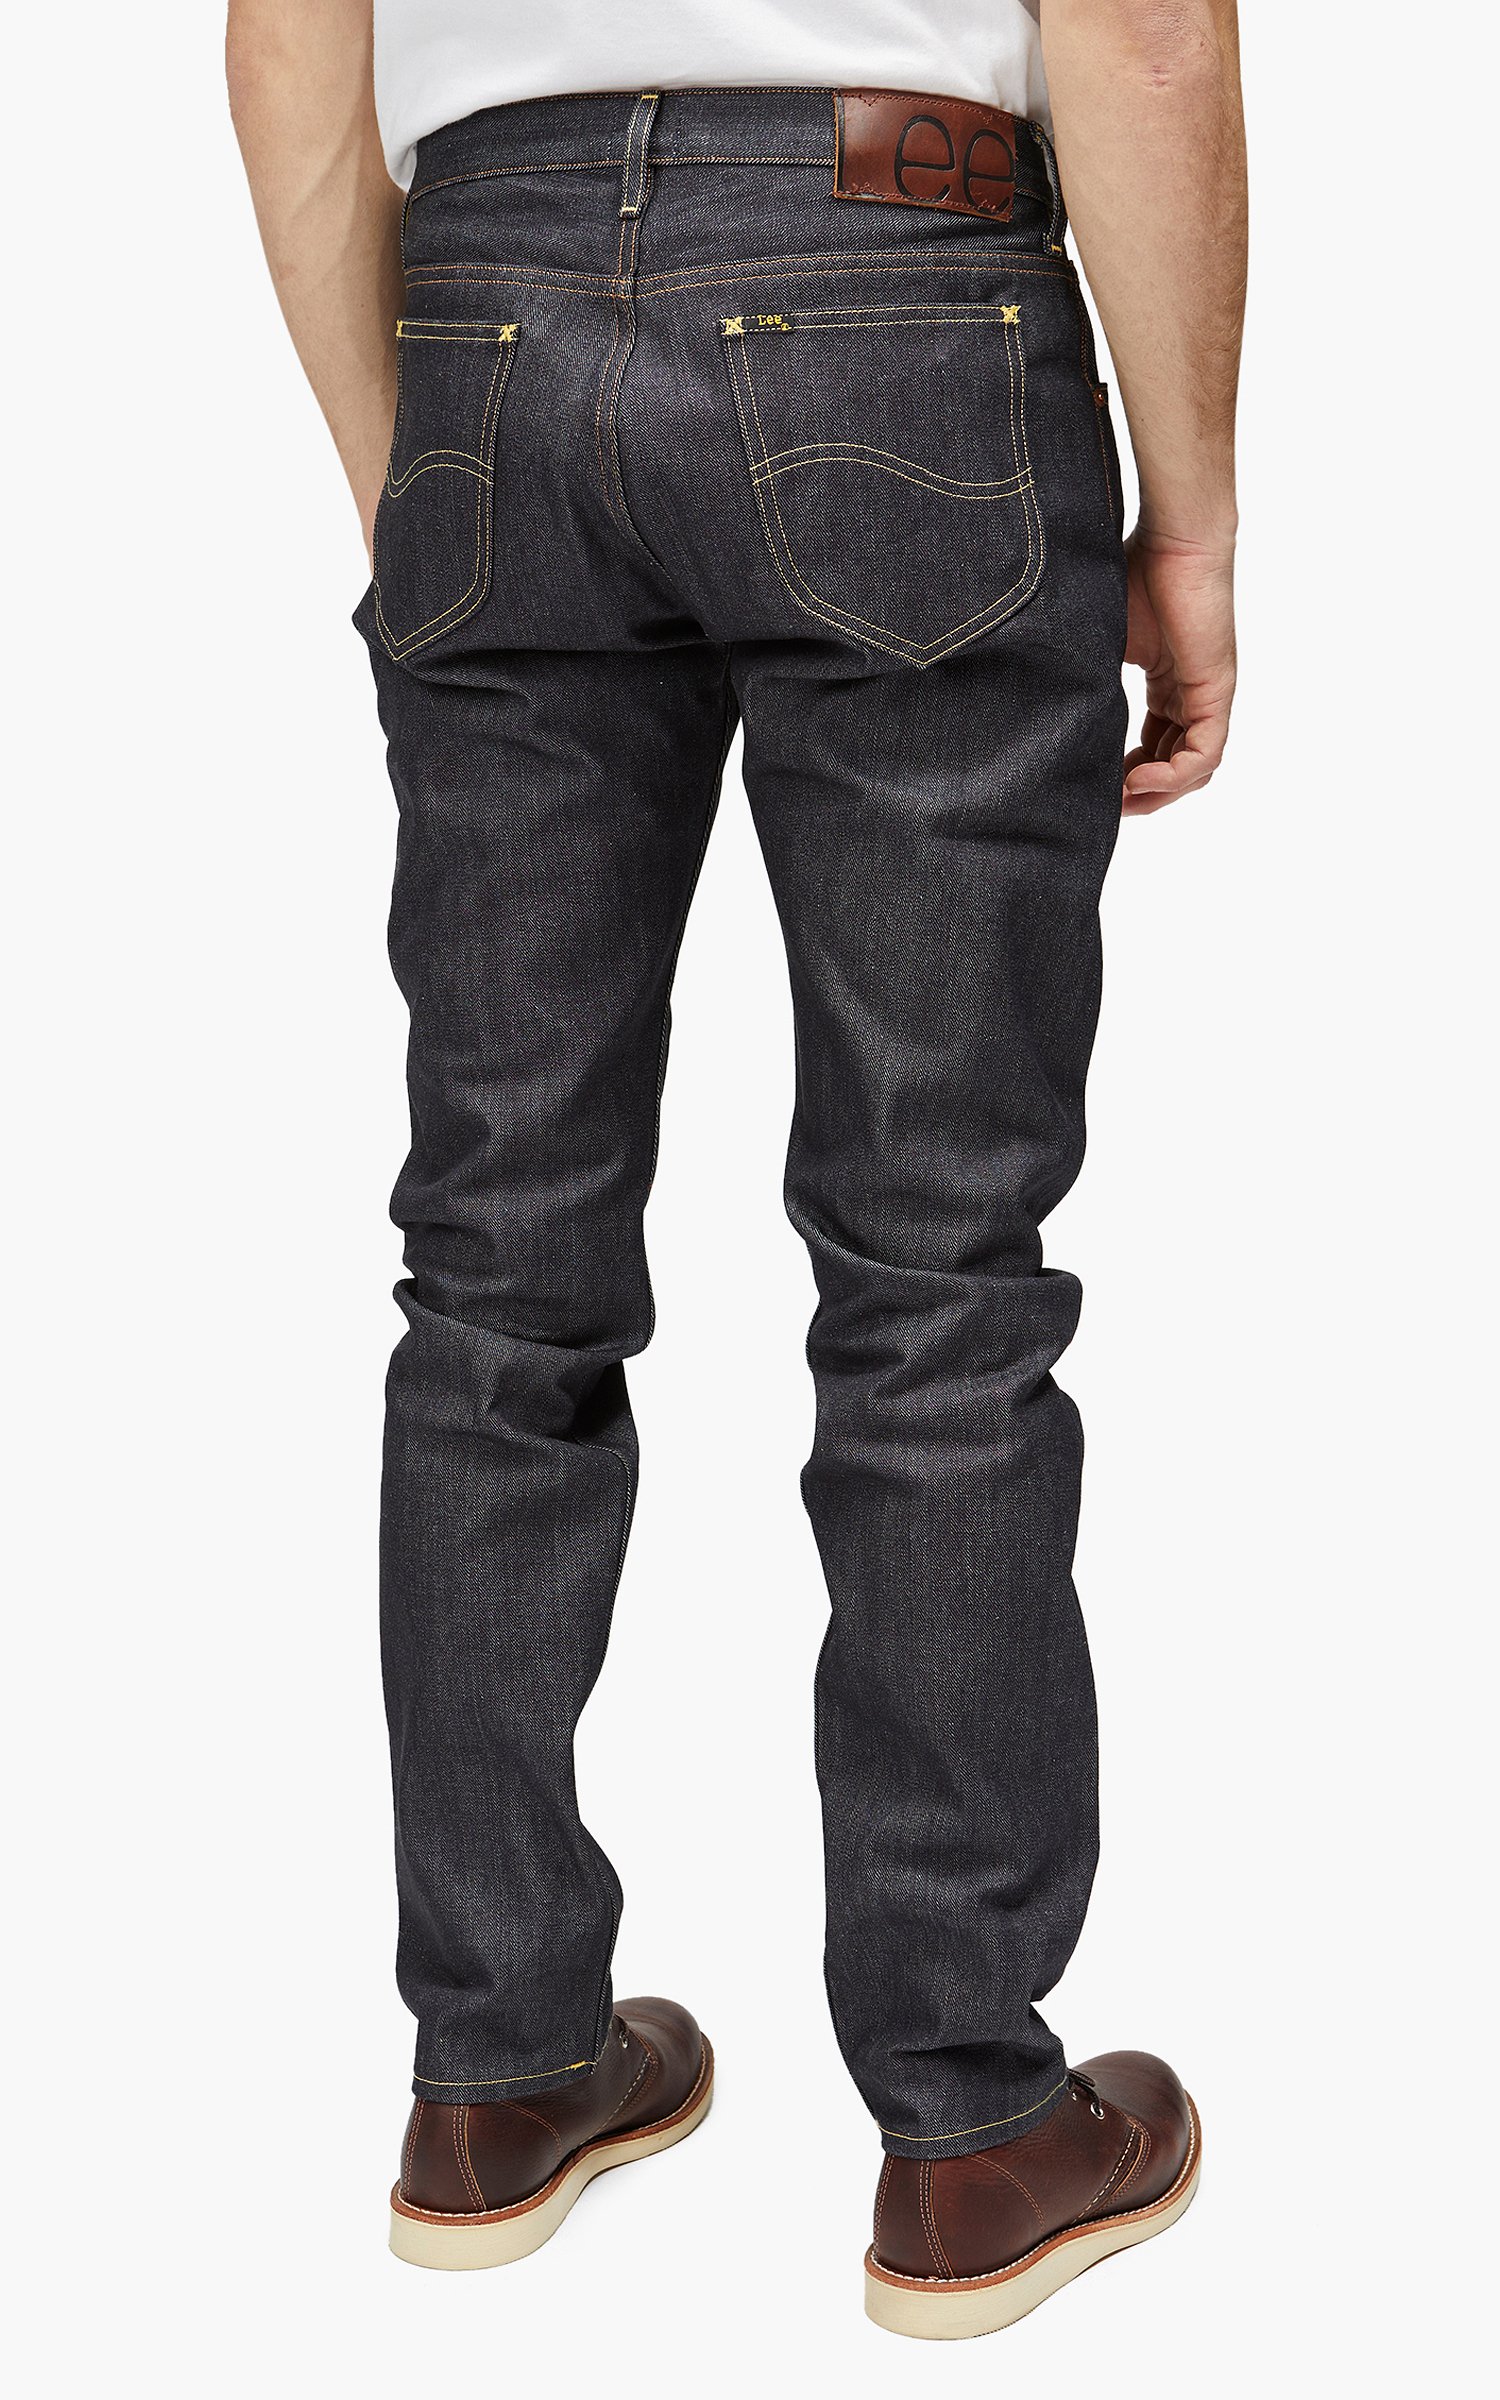 Lee 101 101 Rider Jeans Dry Selvedge Indigo 13.75oz | Cultizm